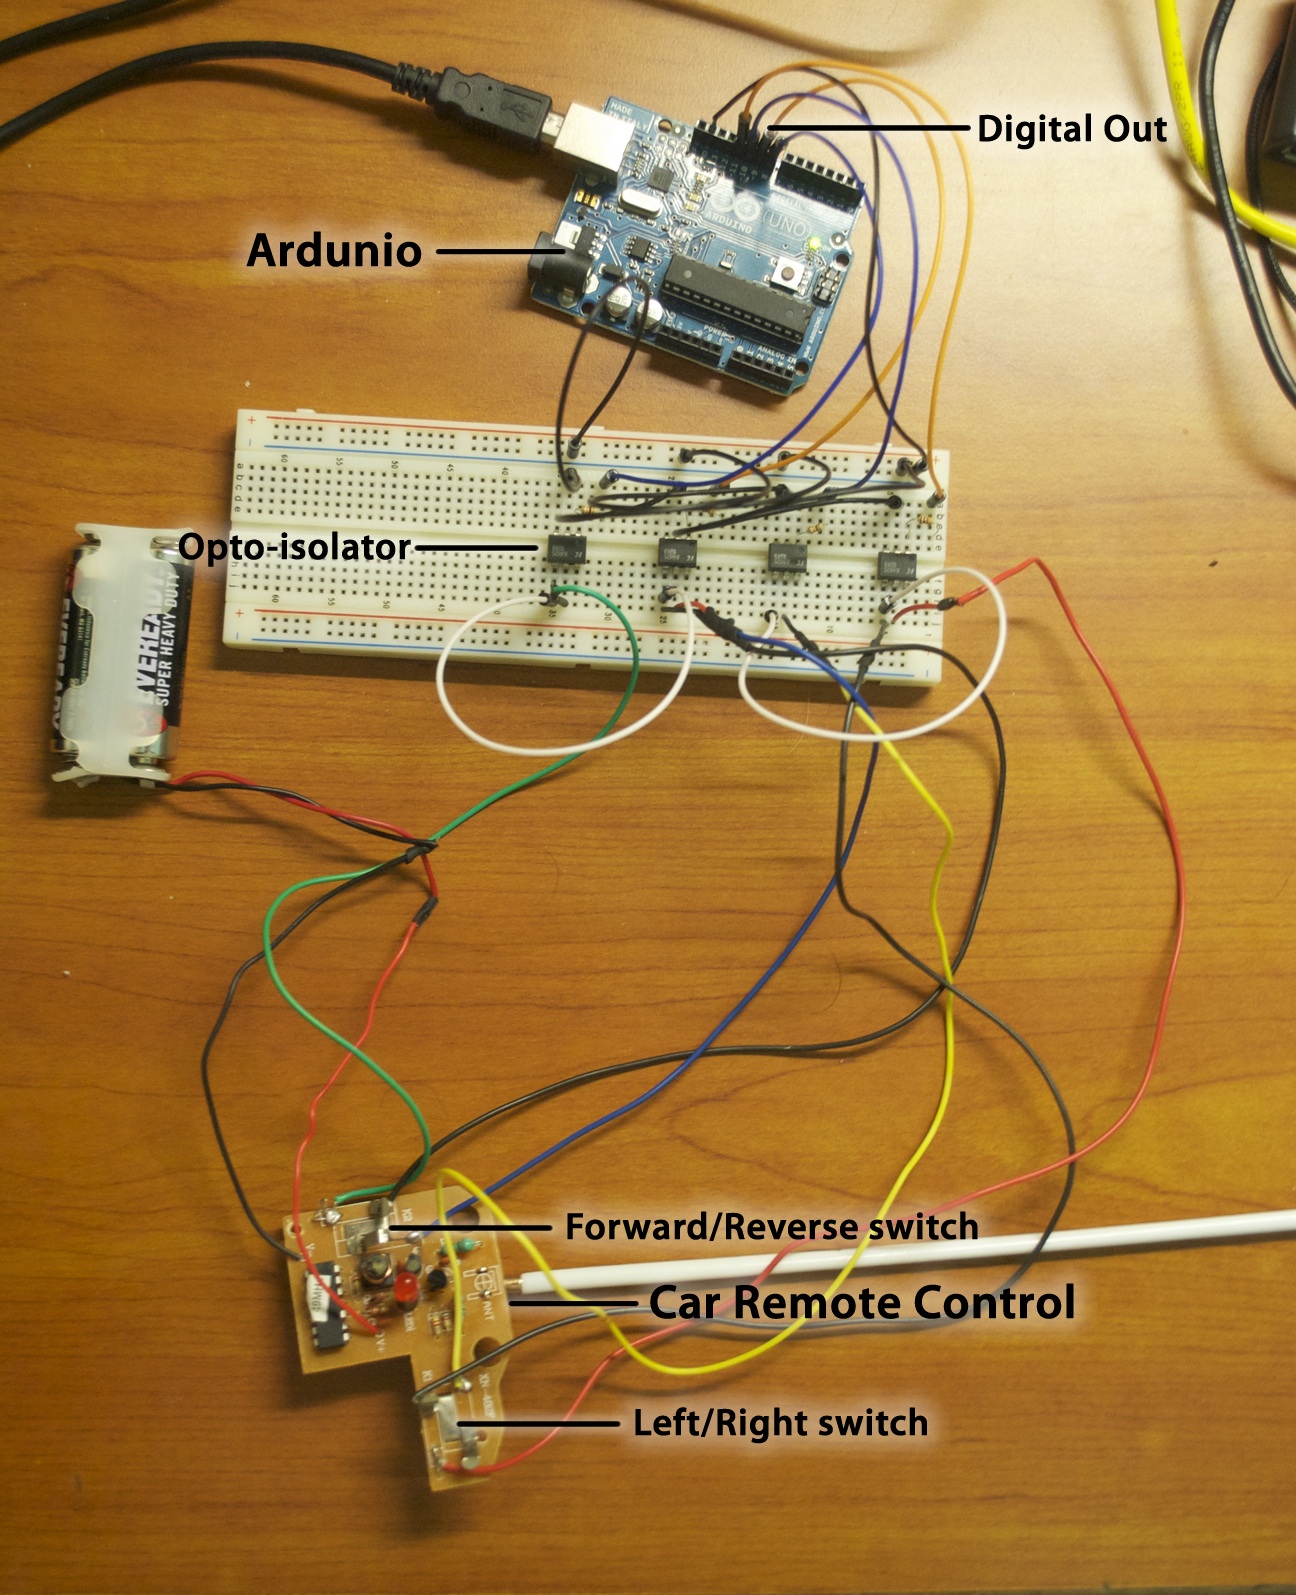 Photo of Arduino circuit